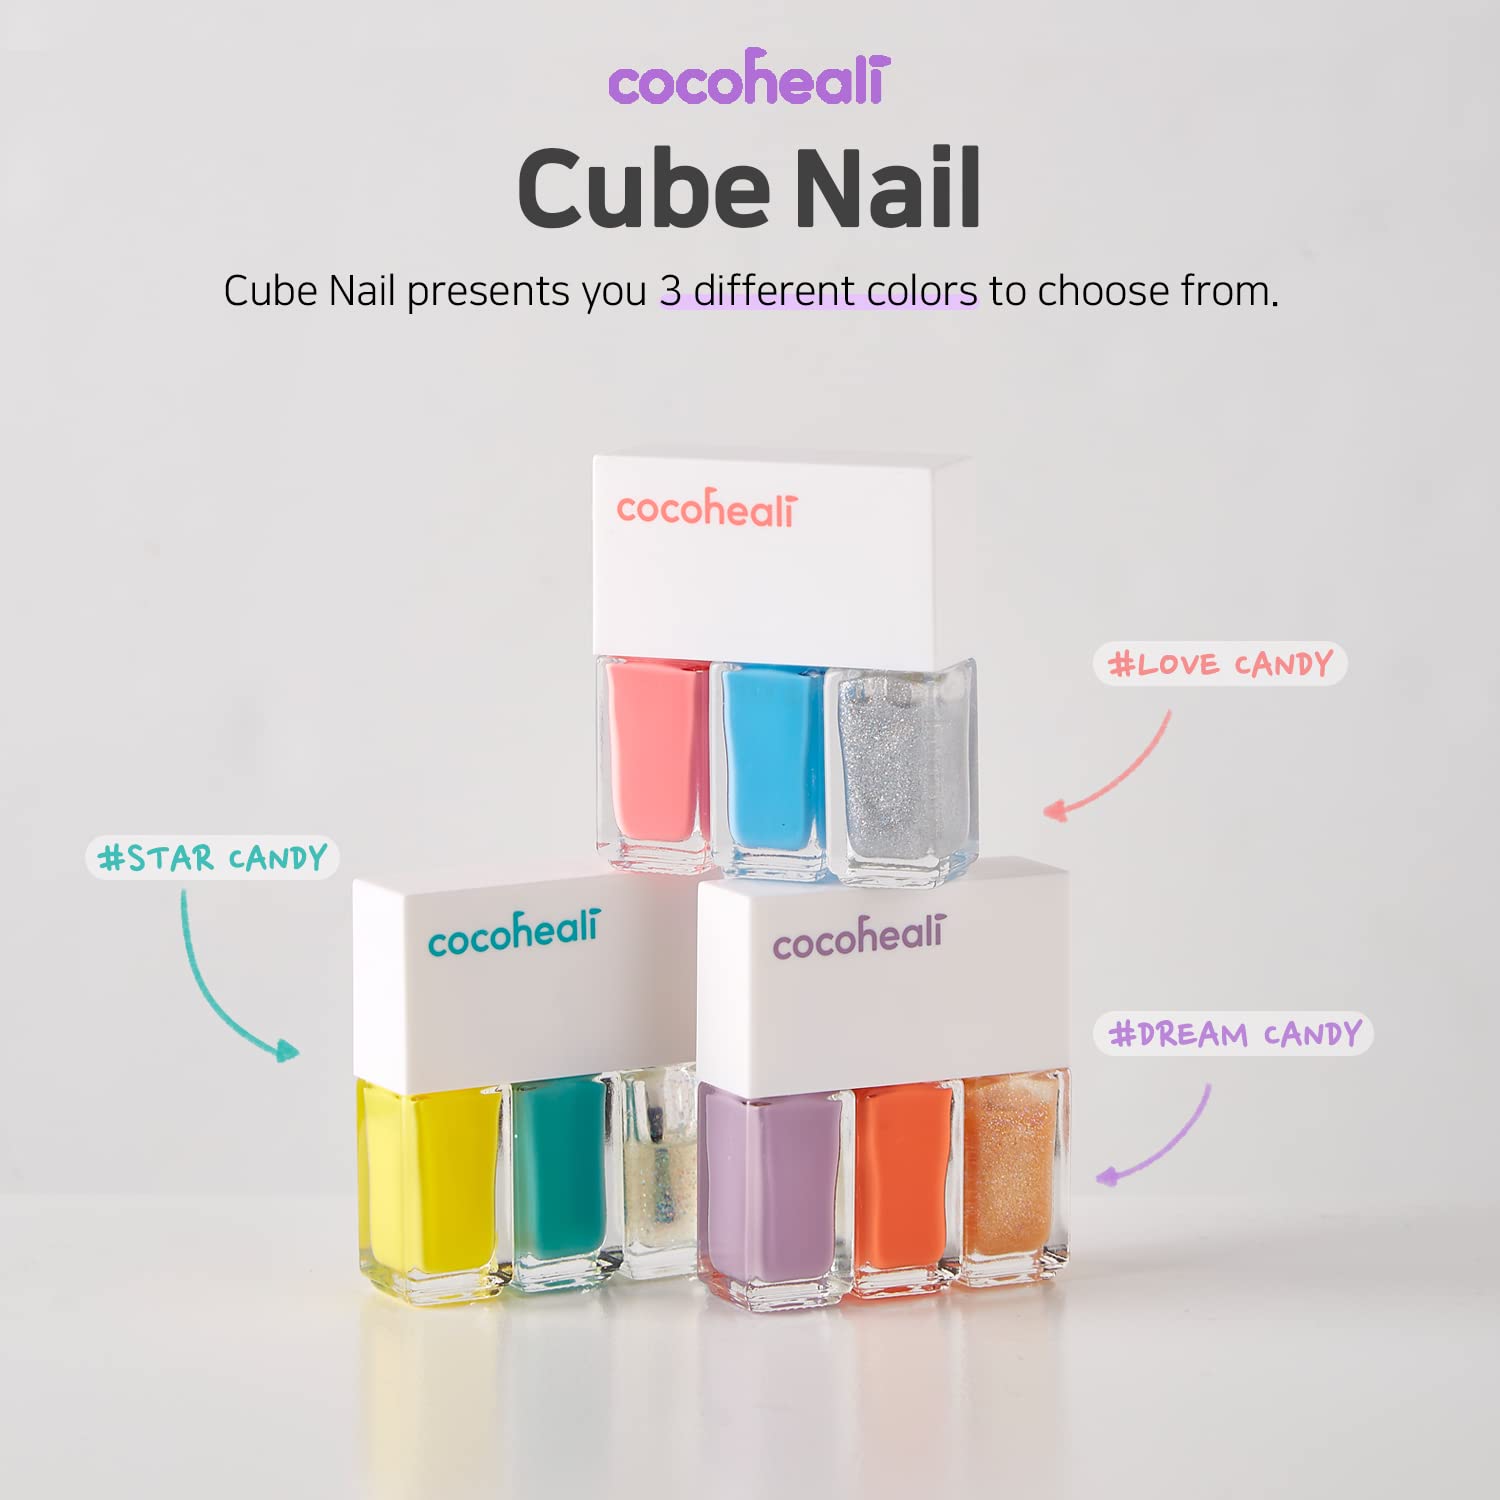 COCOHEALI Cube Nail Star Candy 13.5g สีทาเล็บปลอดภัยไร้สารอันตราย 100% เด็กทาได้ คุณแม่มั่นใจ ลอกออกได้ ไม่ต้องล้าง ไม่มีกลิ่นฉุน